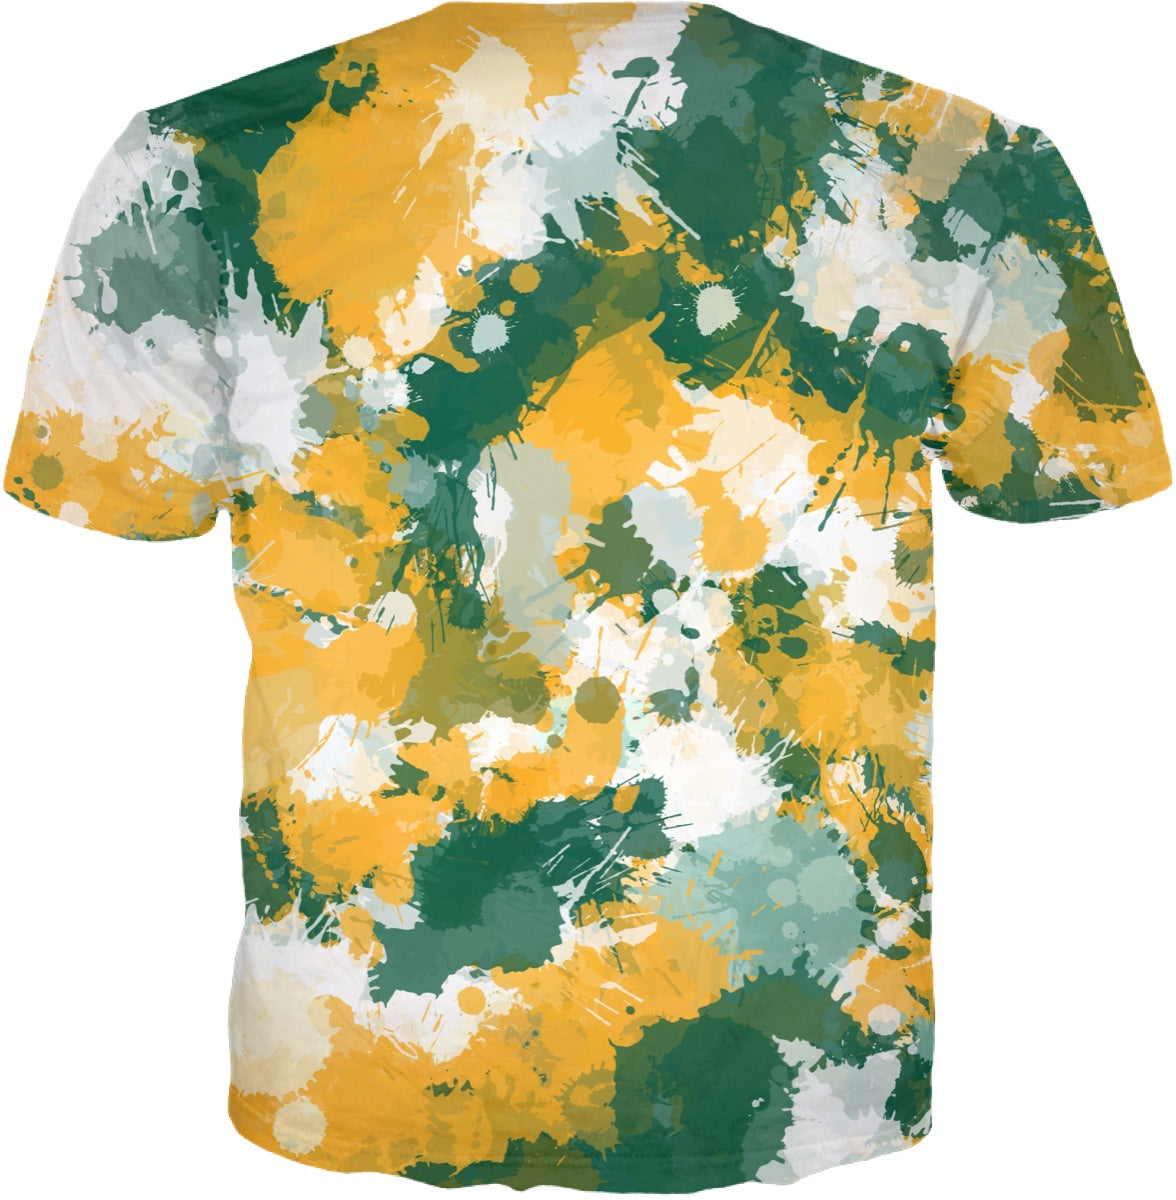 Green Yellow and BigTexFunkadelic T-Shirt Splatter Paint – White